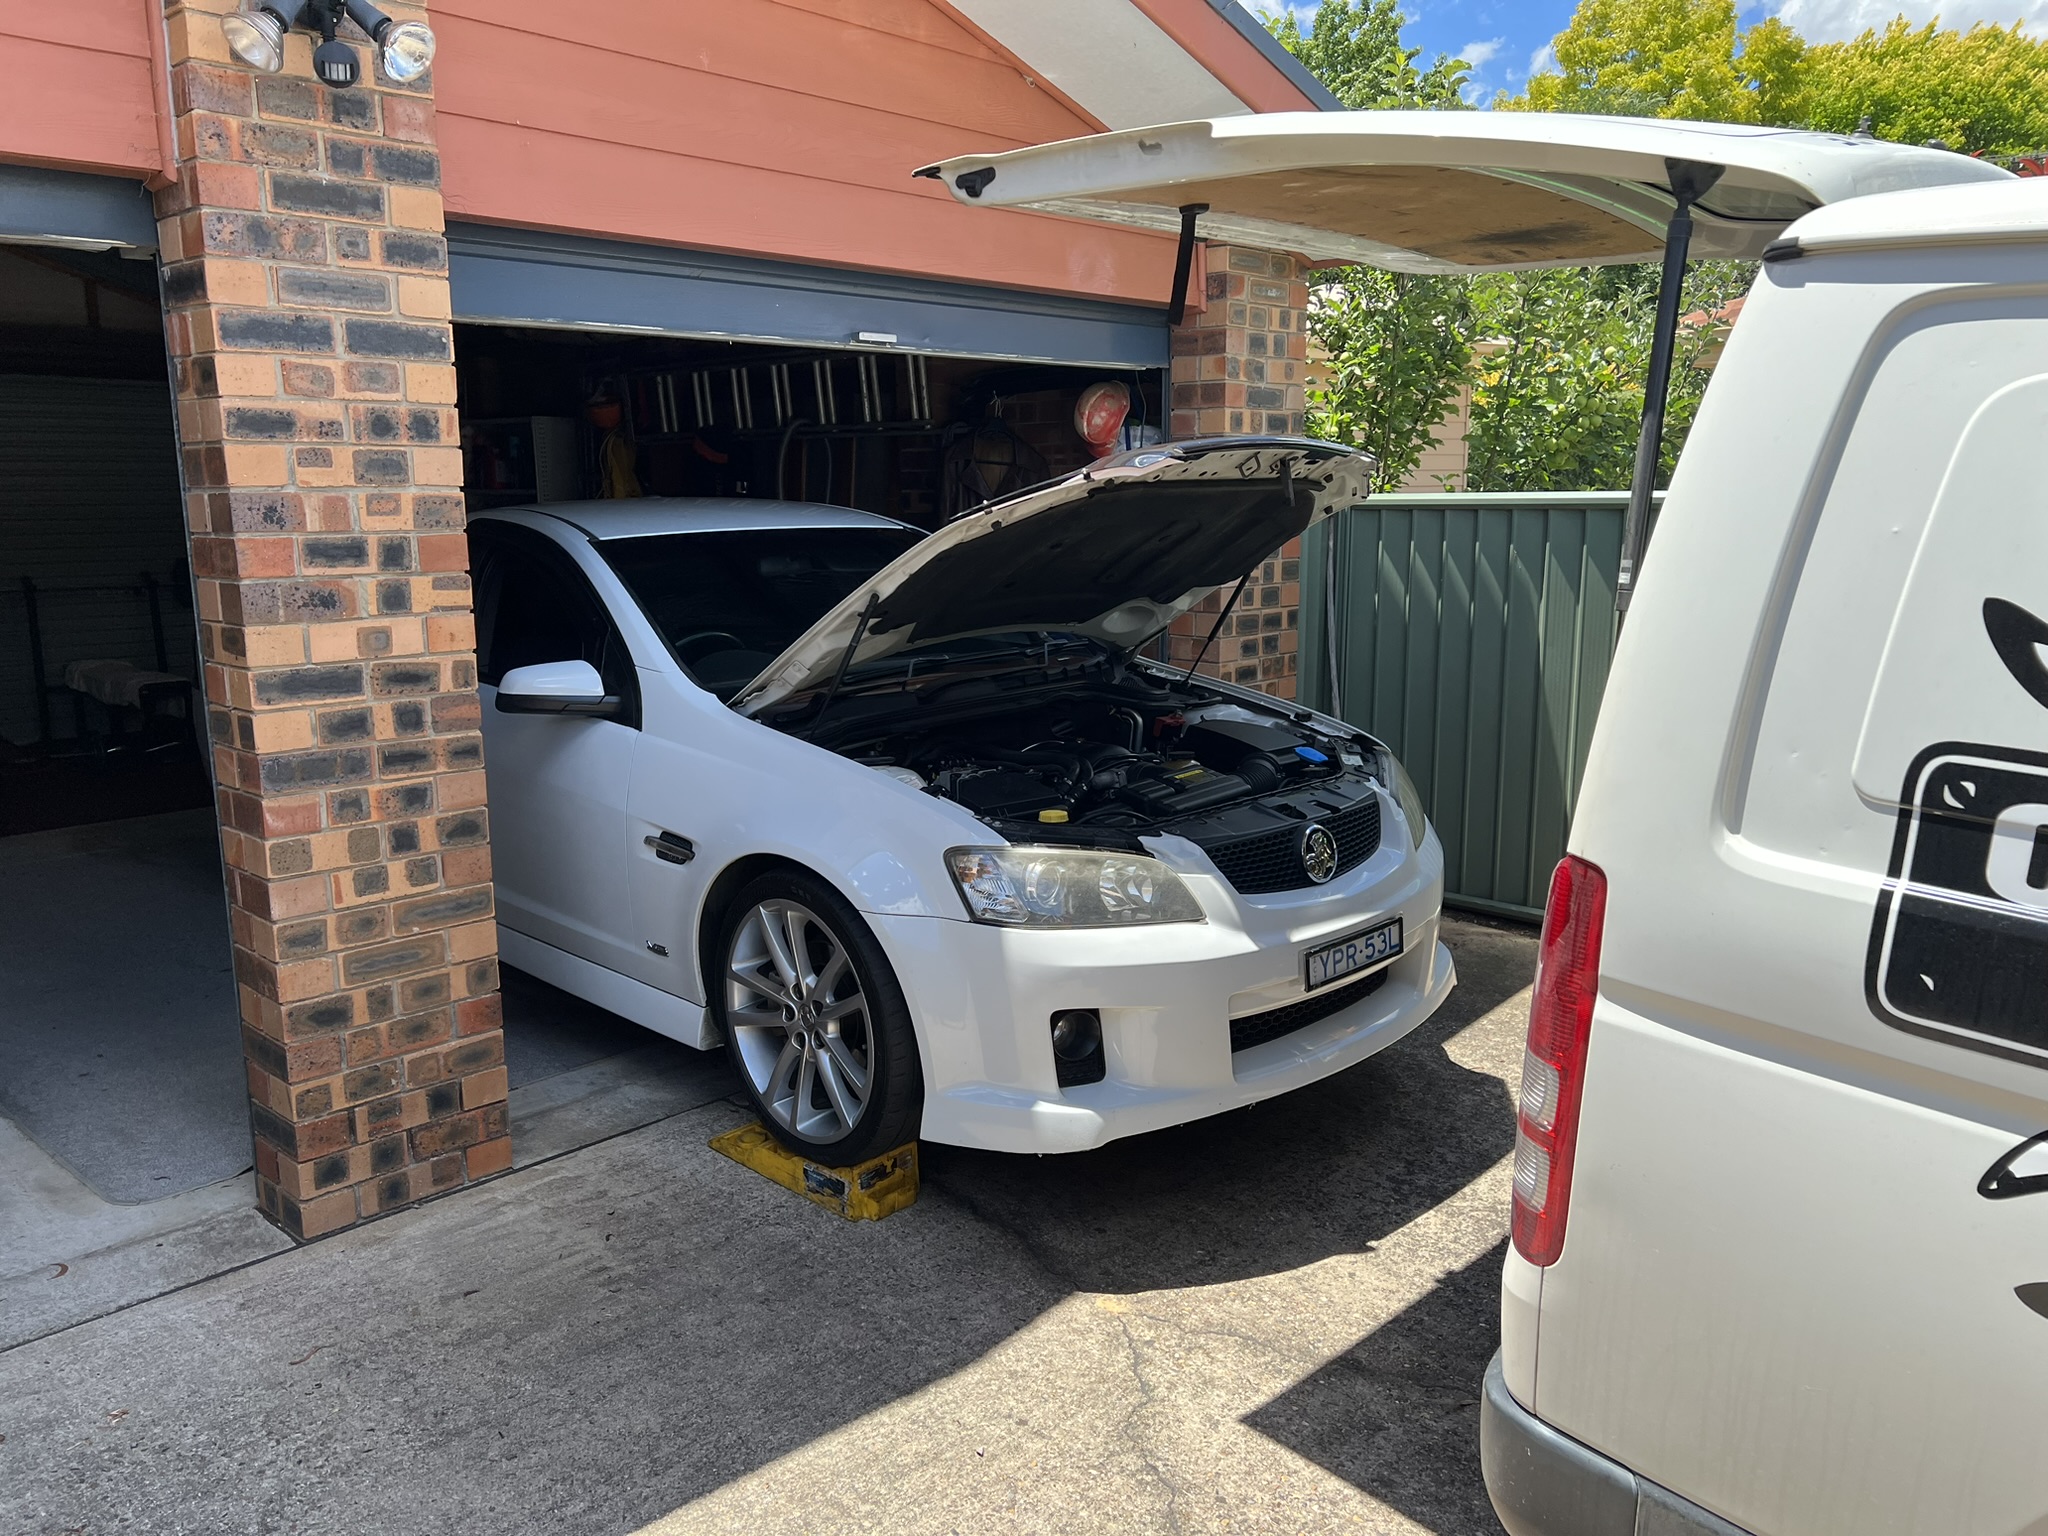 Holden car service in Canberra